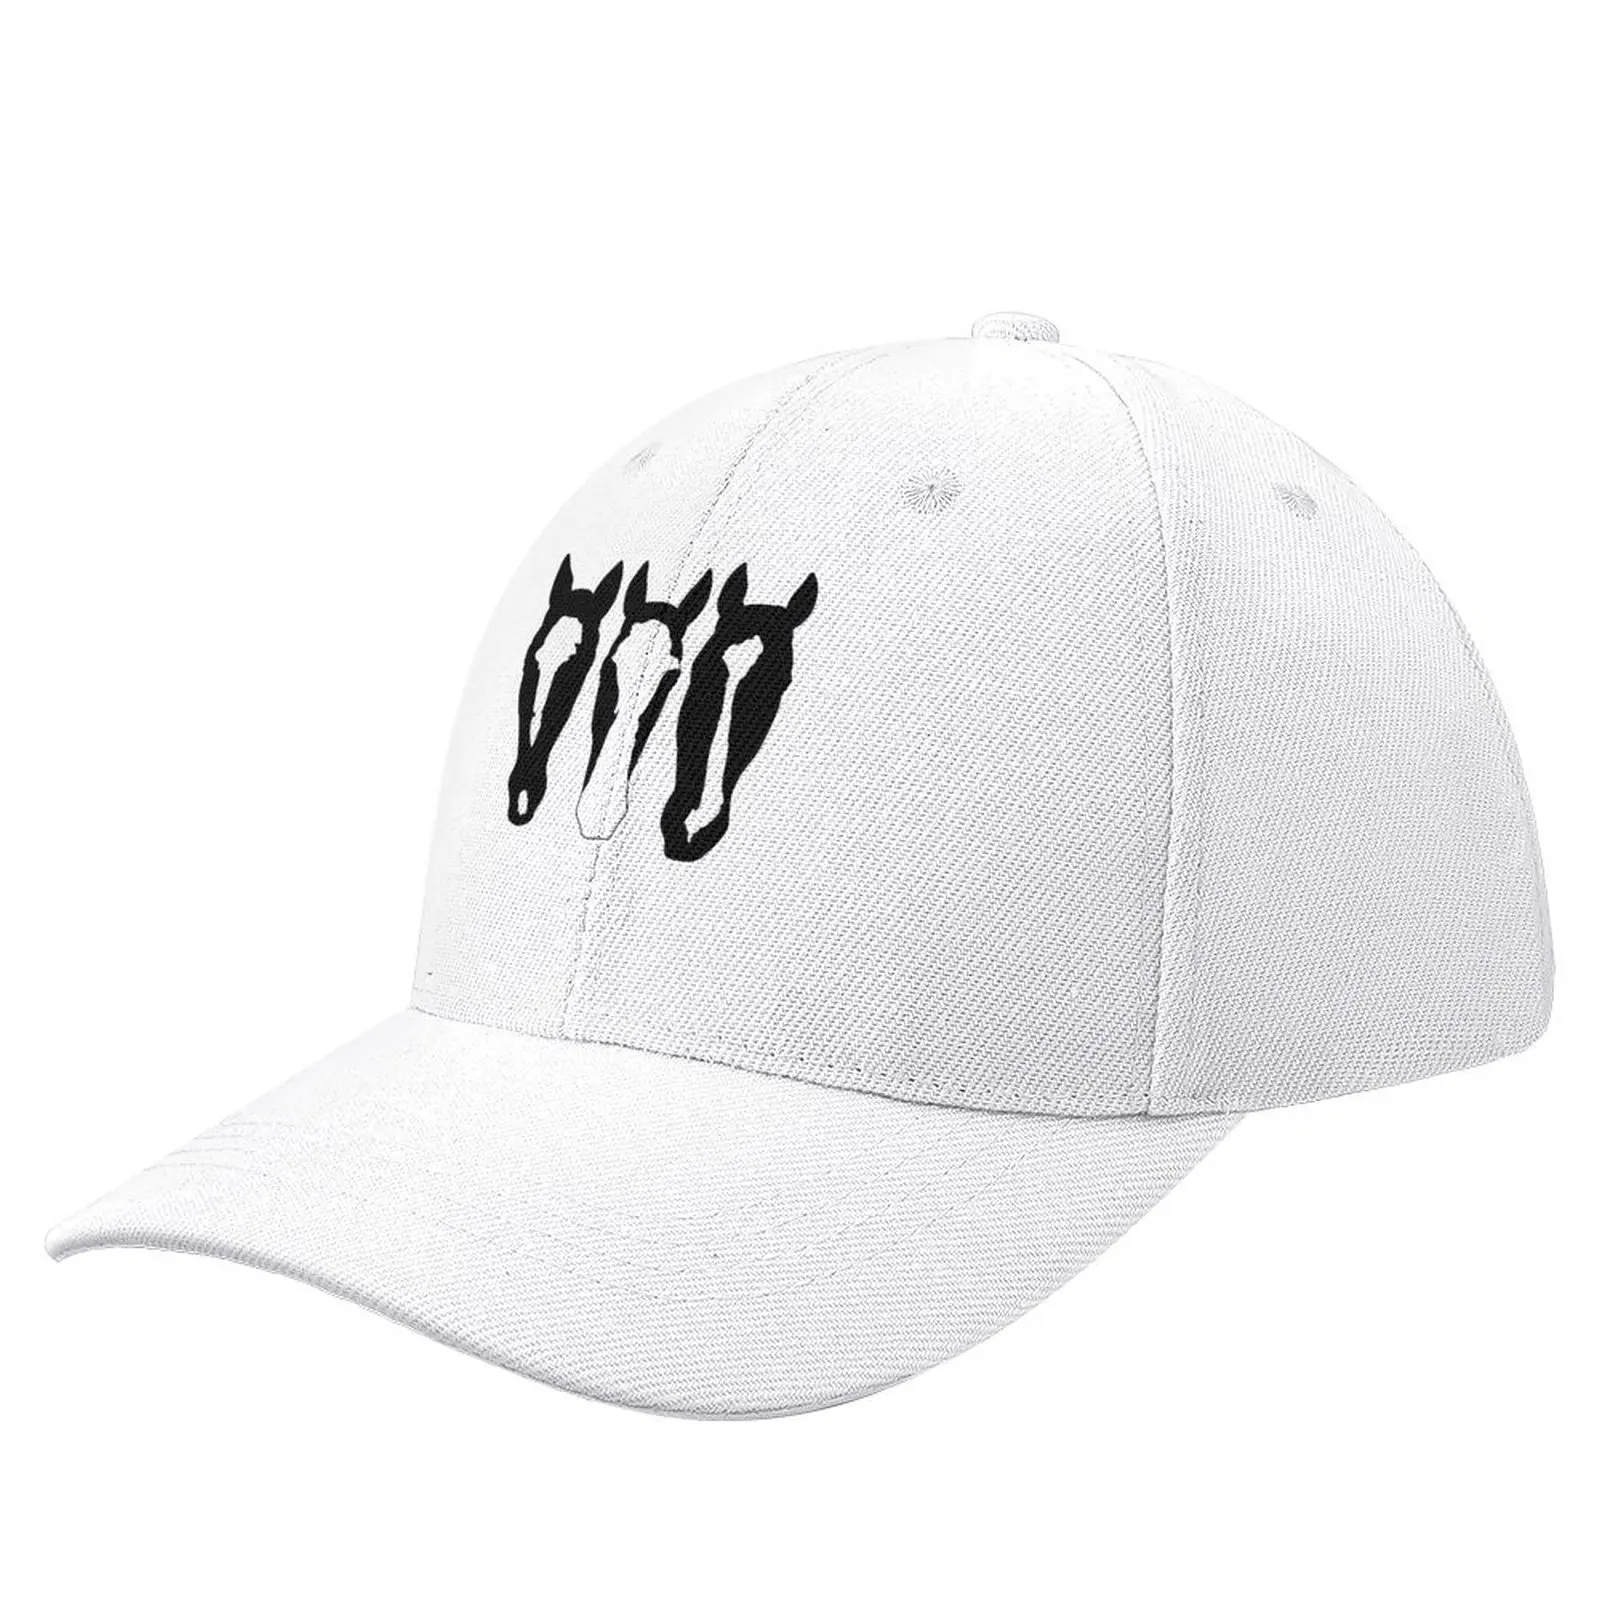 

Custom Order for Katie Baseball Cap Luxury Cap party Hat Sunscreen Ball Cap Trucker Hats For Men Women's